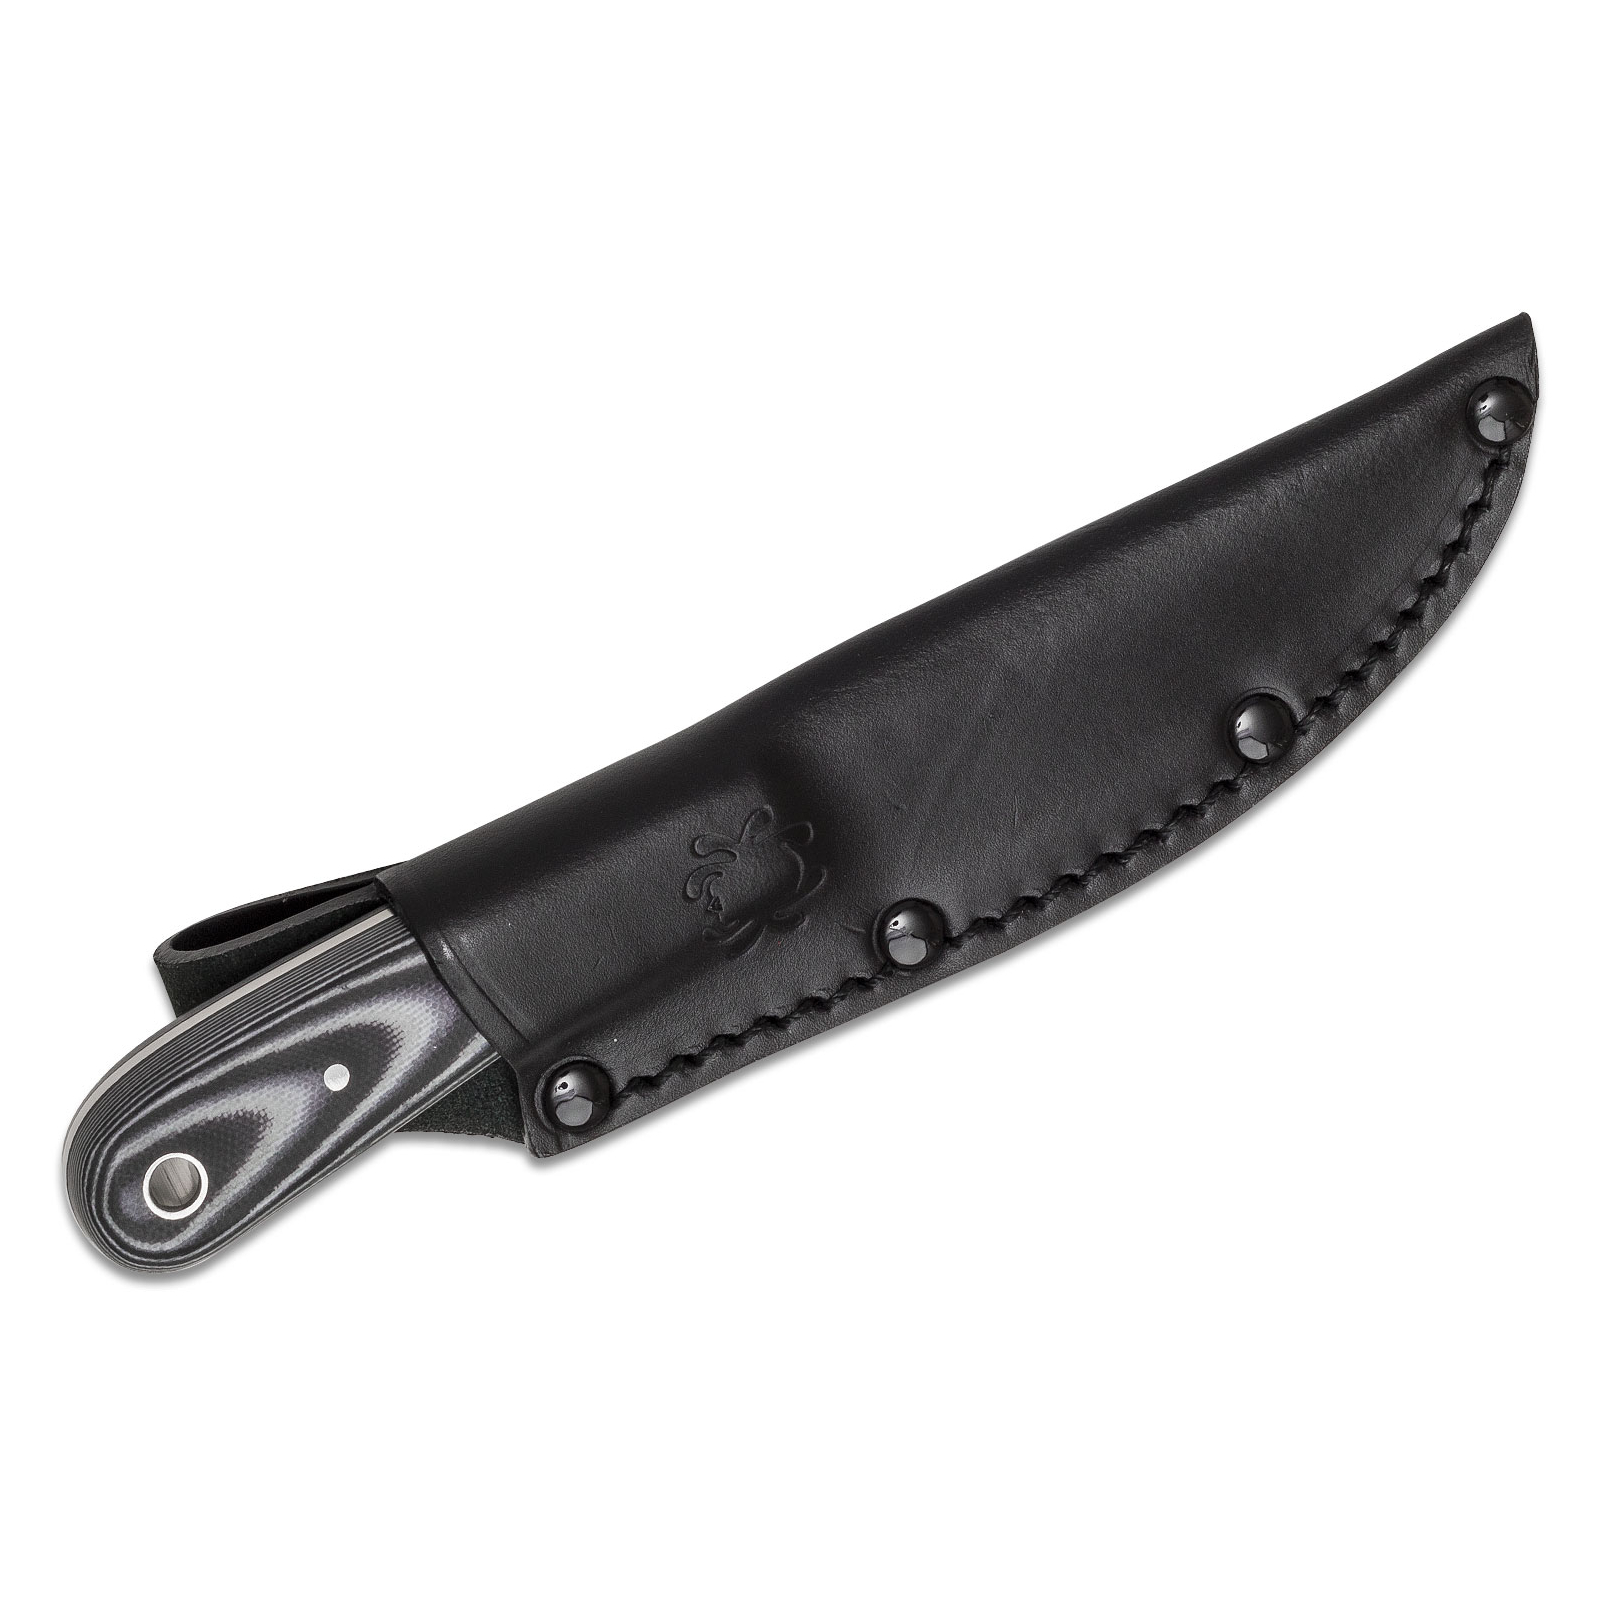 Нож Spyderco Bow River (FB46GP) изображение 4